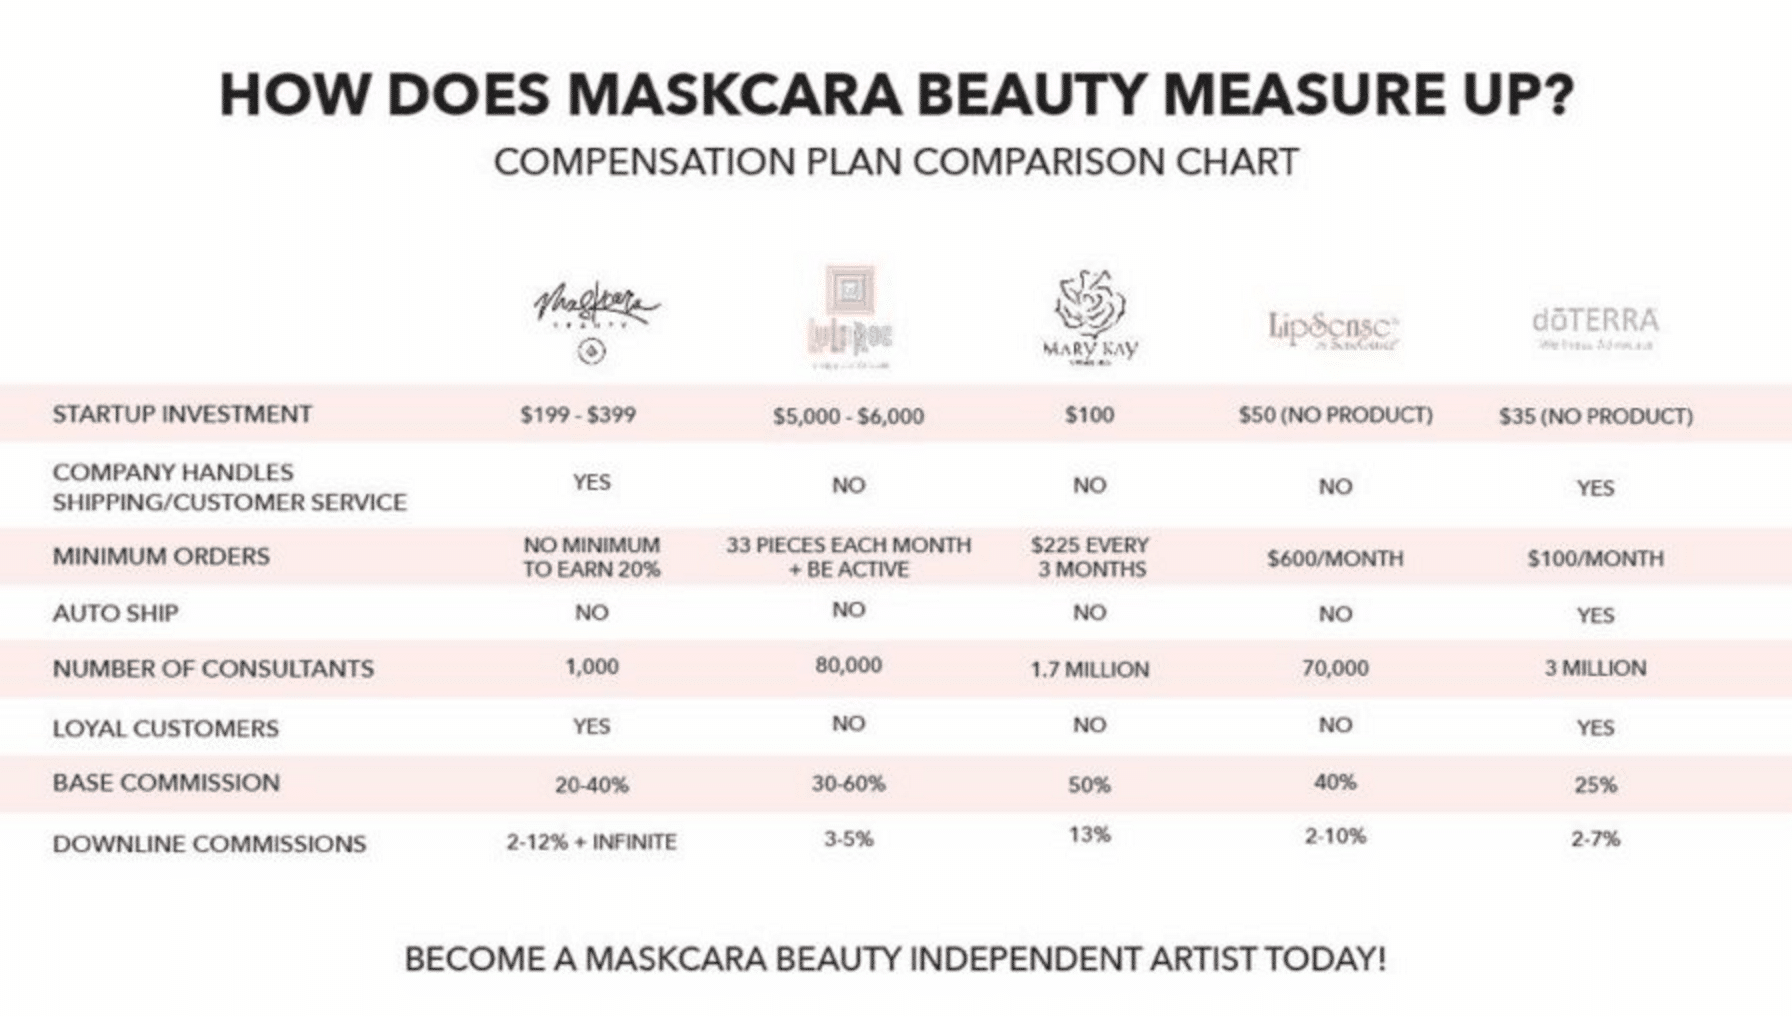 Maskcara Compensation Plan with Maskcara Beauty Girl at www.maskcarabeautygirl.com